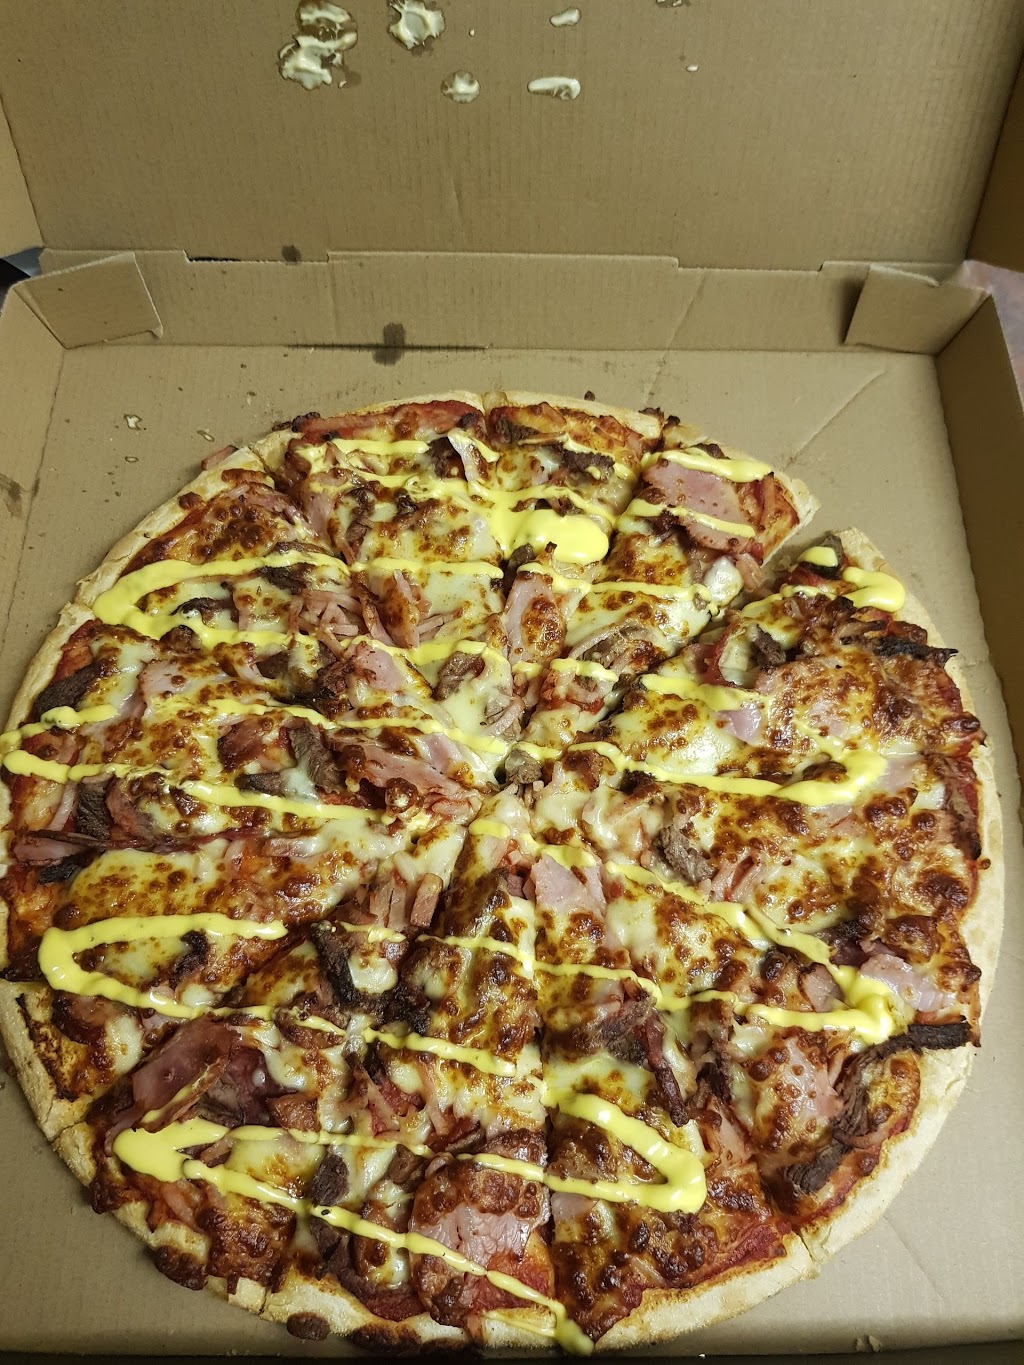 Slice Gourmet Pizza Sensation | meal takeaway | 289 Brunker Rd, Adamstown NSW 2289, Australia | 0249509199 OR +61 2 4950 9199